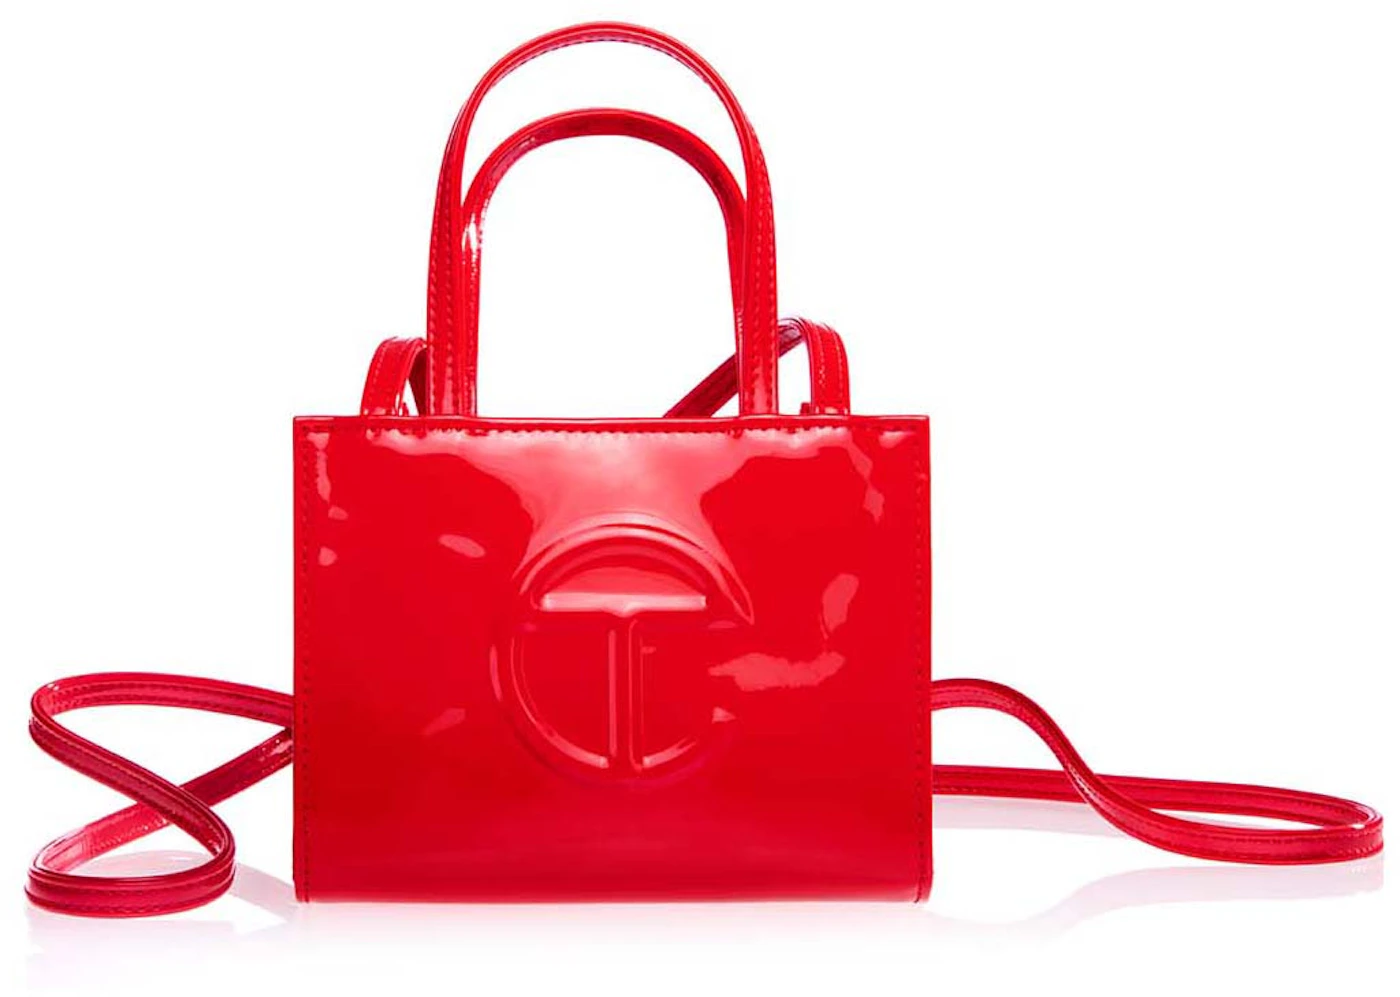 Louis Vuitton Red Patent leather Handbag  Patent leather handbags, Red  patent leather handbag, Leather handbags